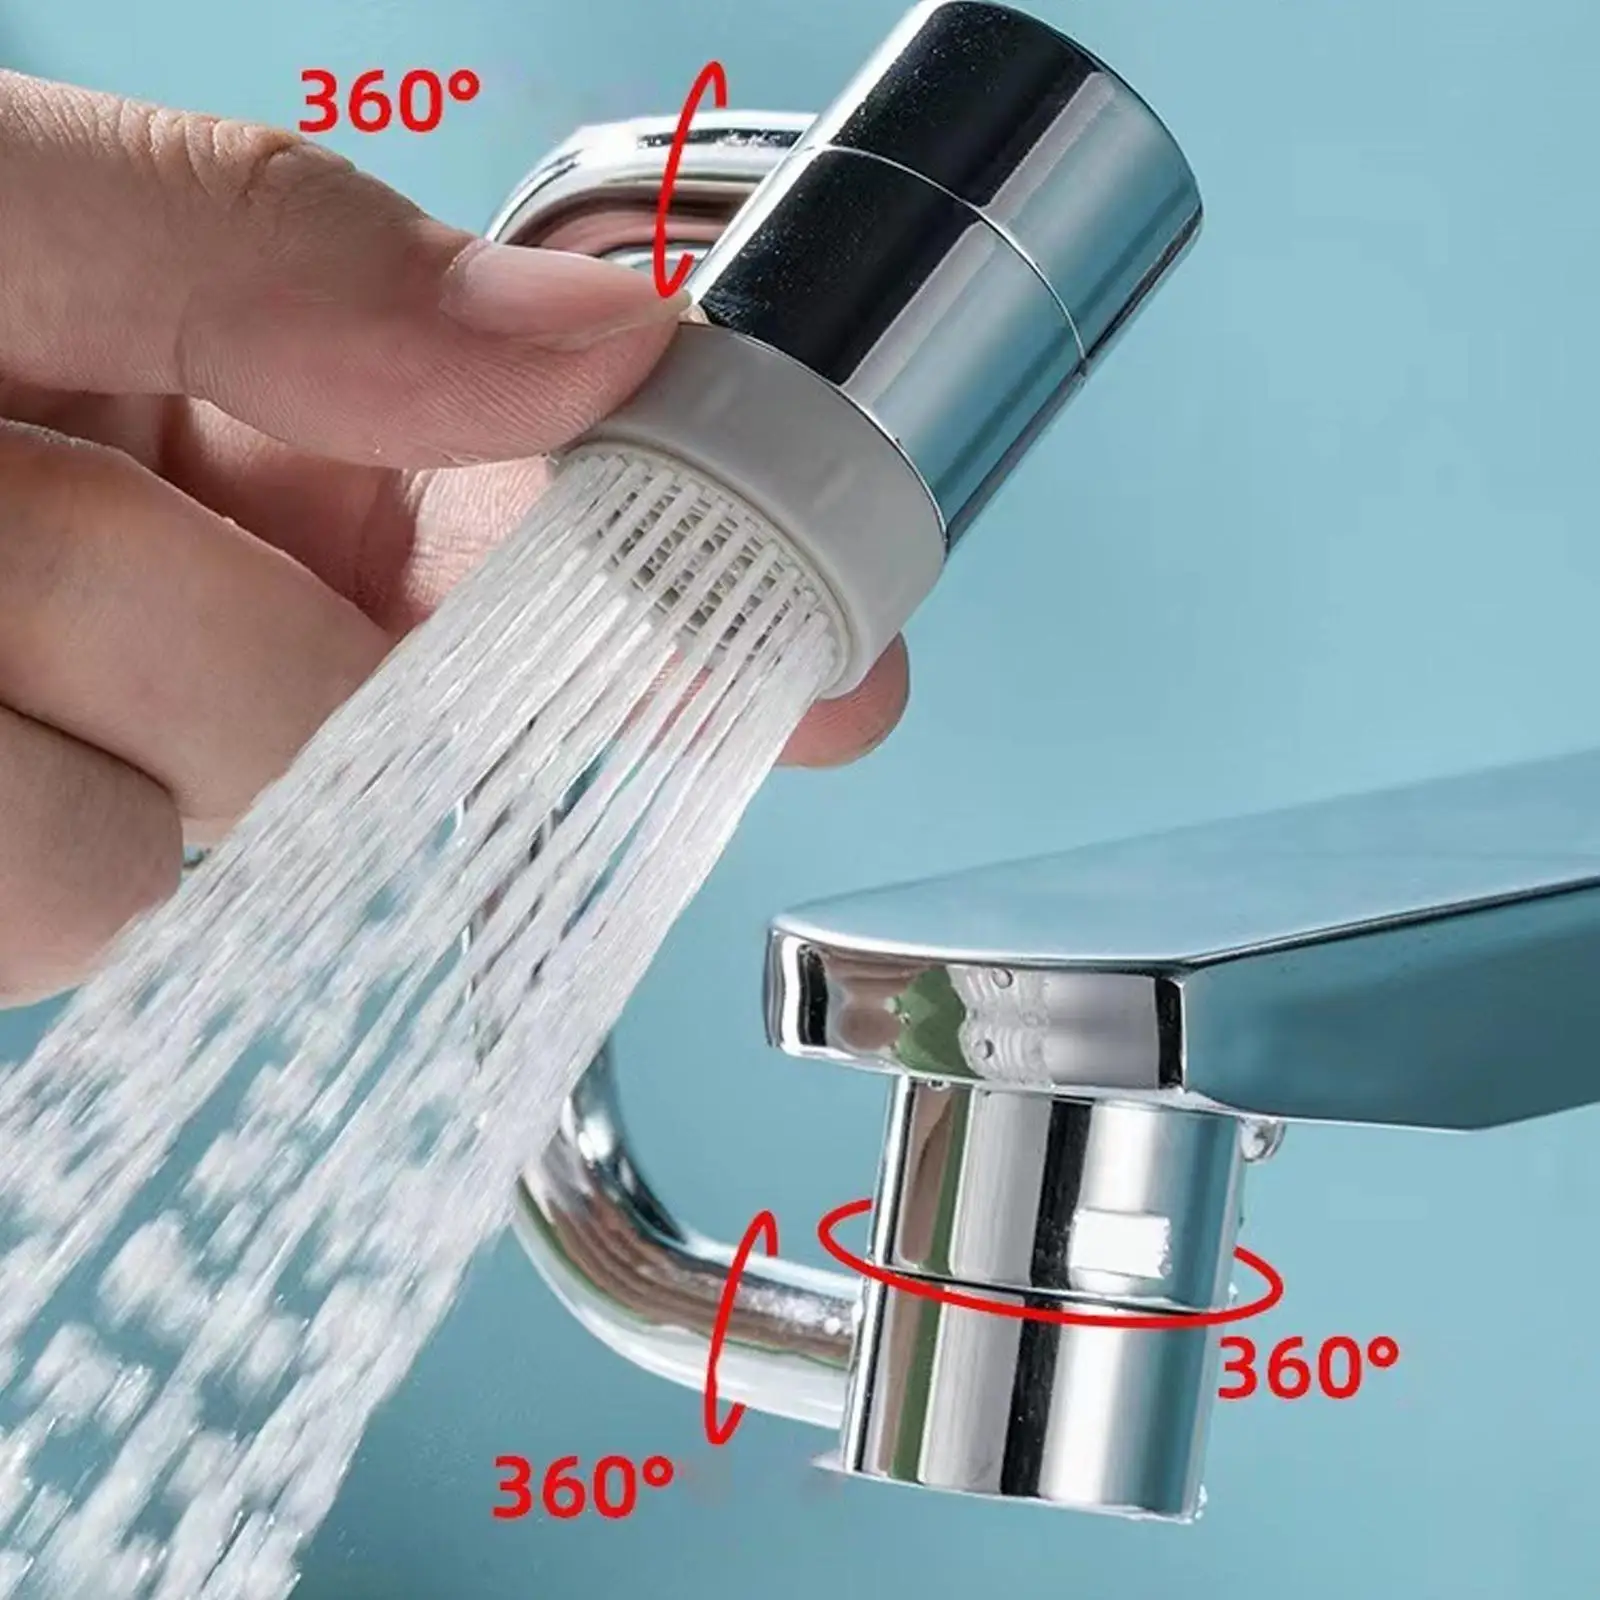 

Universal 1080 Rotation Extender Faucet Kitchen Faucet Sprayer Robotic Sink Faucet Sprayer Replacement Swivel Arm T0i9